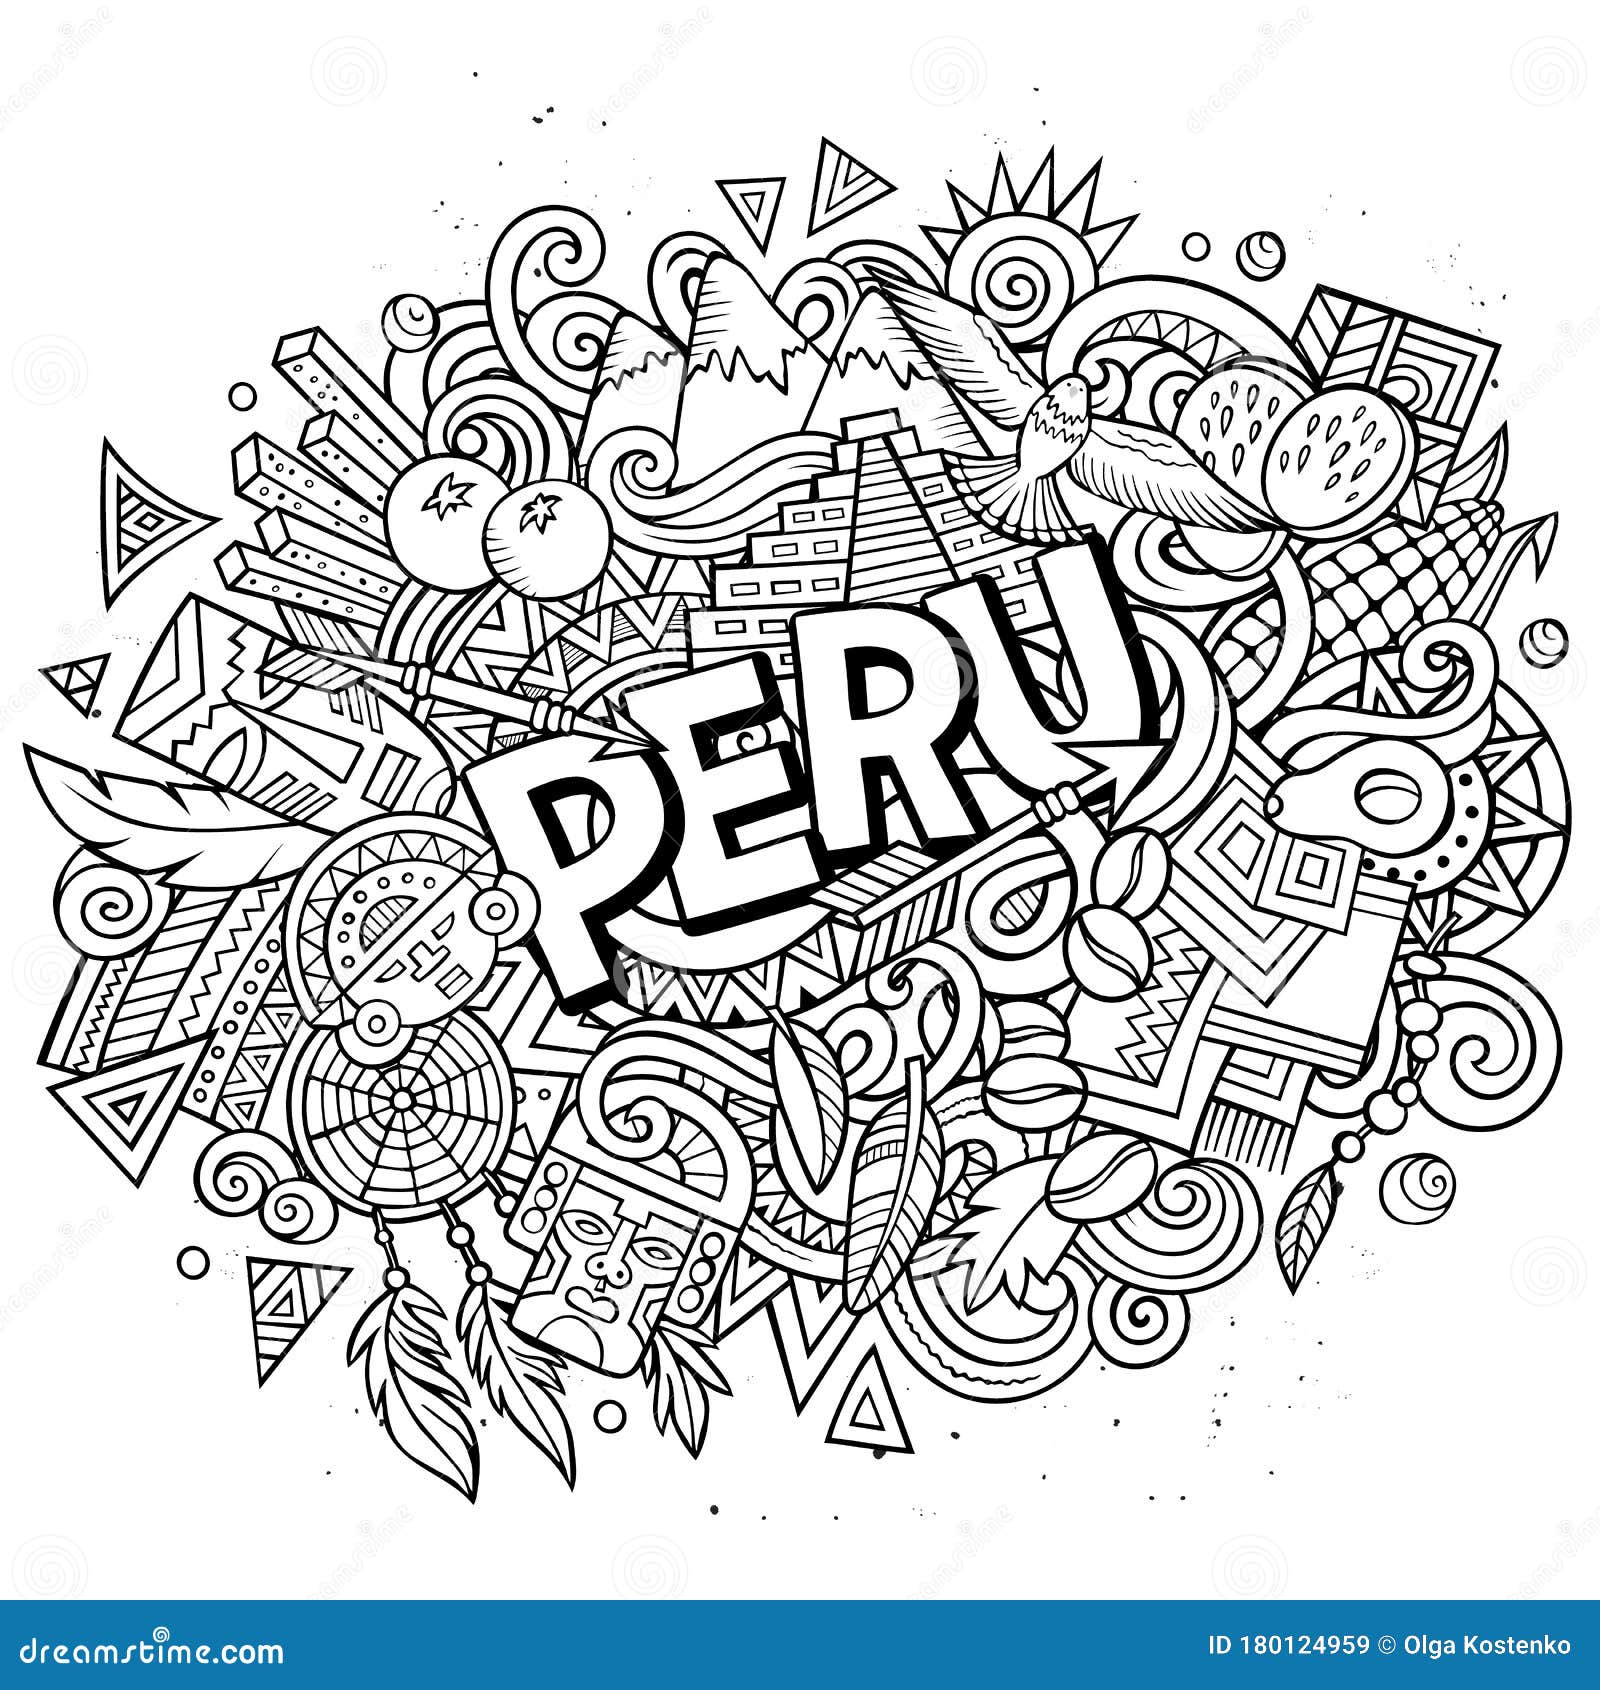 Peru Hand Drawn Cartoon Doodles Illustration. Funny Design. Stock ...